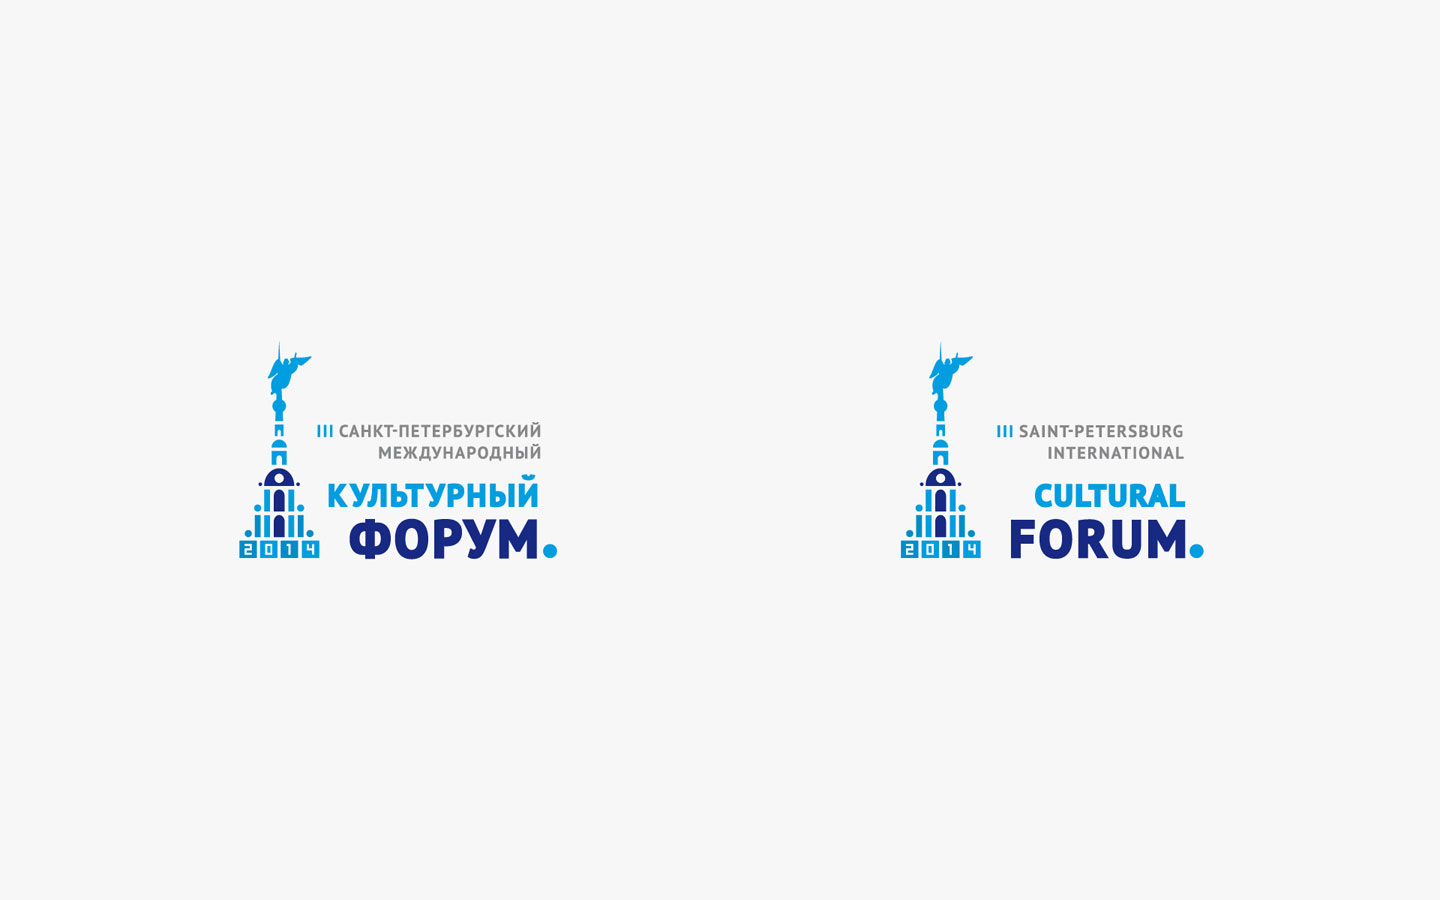 Saint Petersburg Cultural Forum Logo Design in Brand Colours